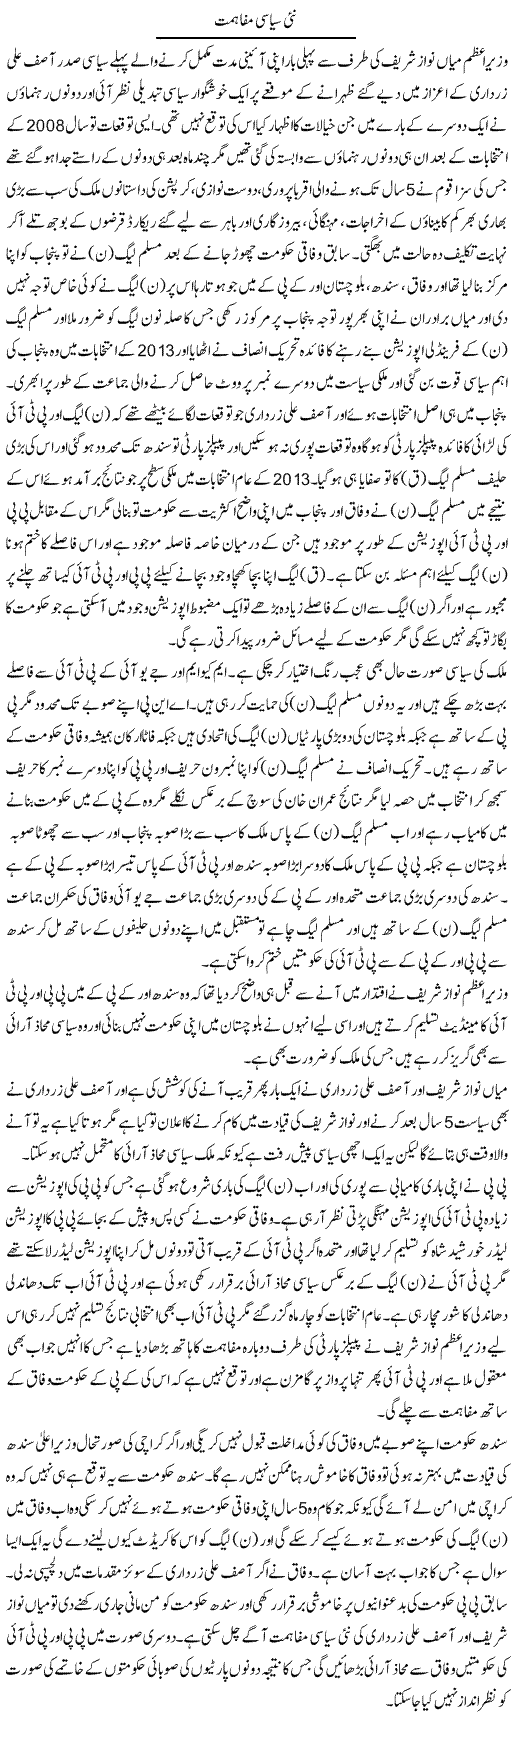 Nai Siasi Mufahimat | Muhammad Saeed Araeen | Daily Urdu Columns